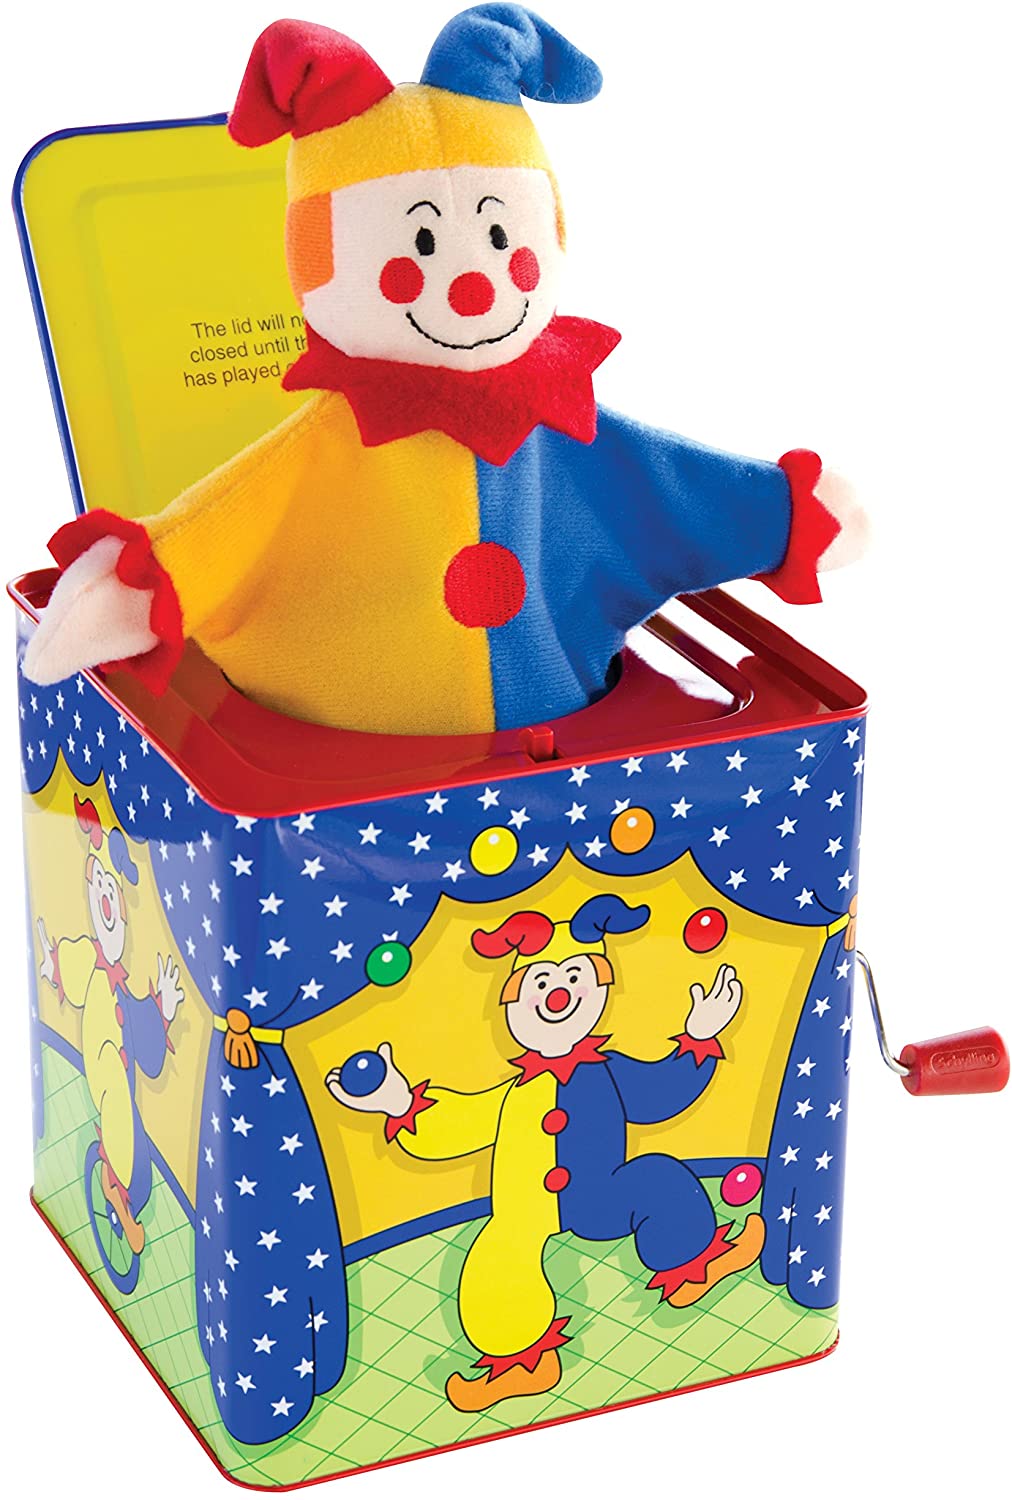 Jester in a Box